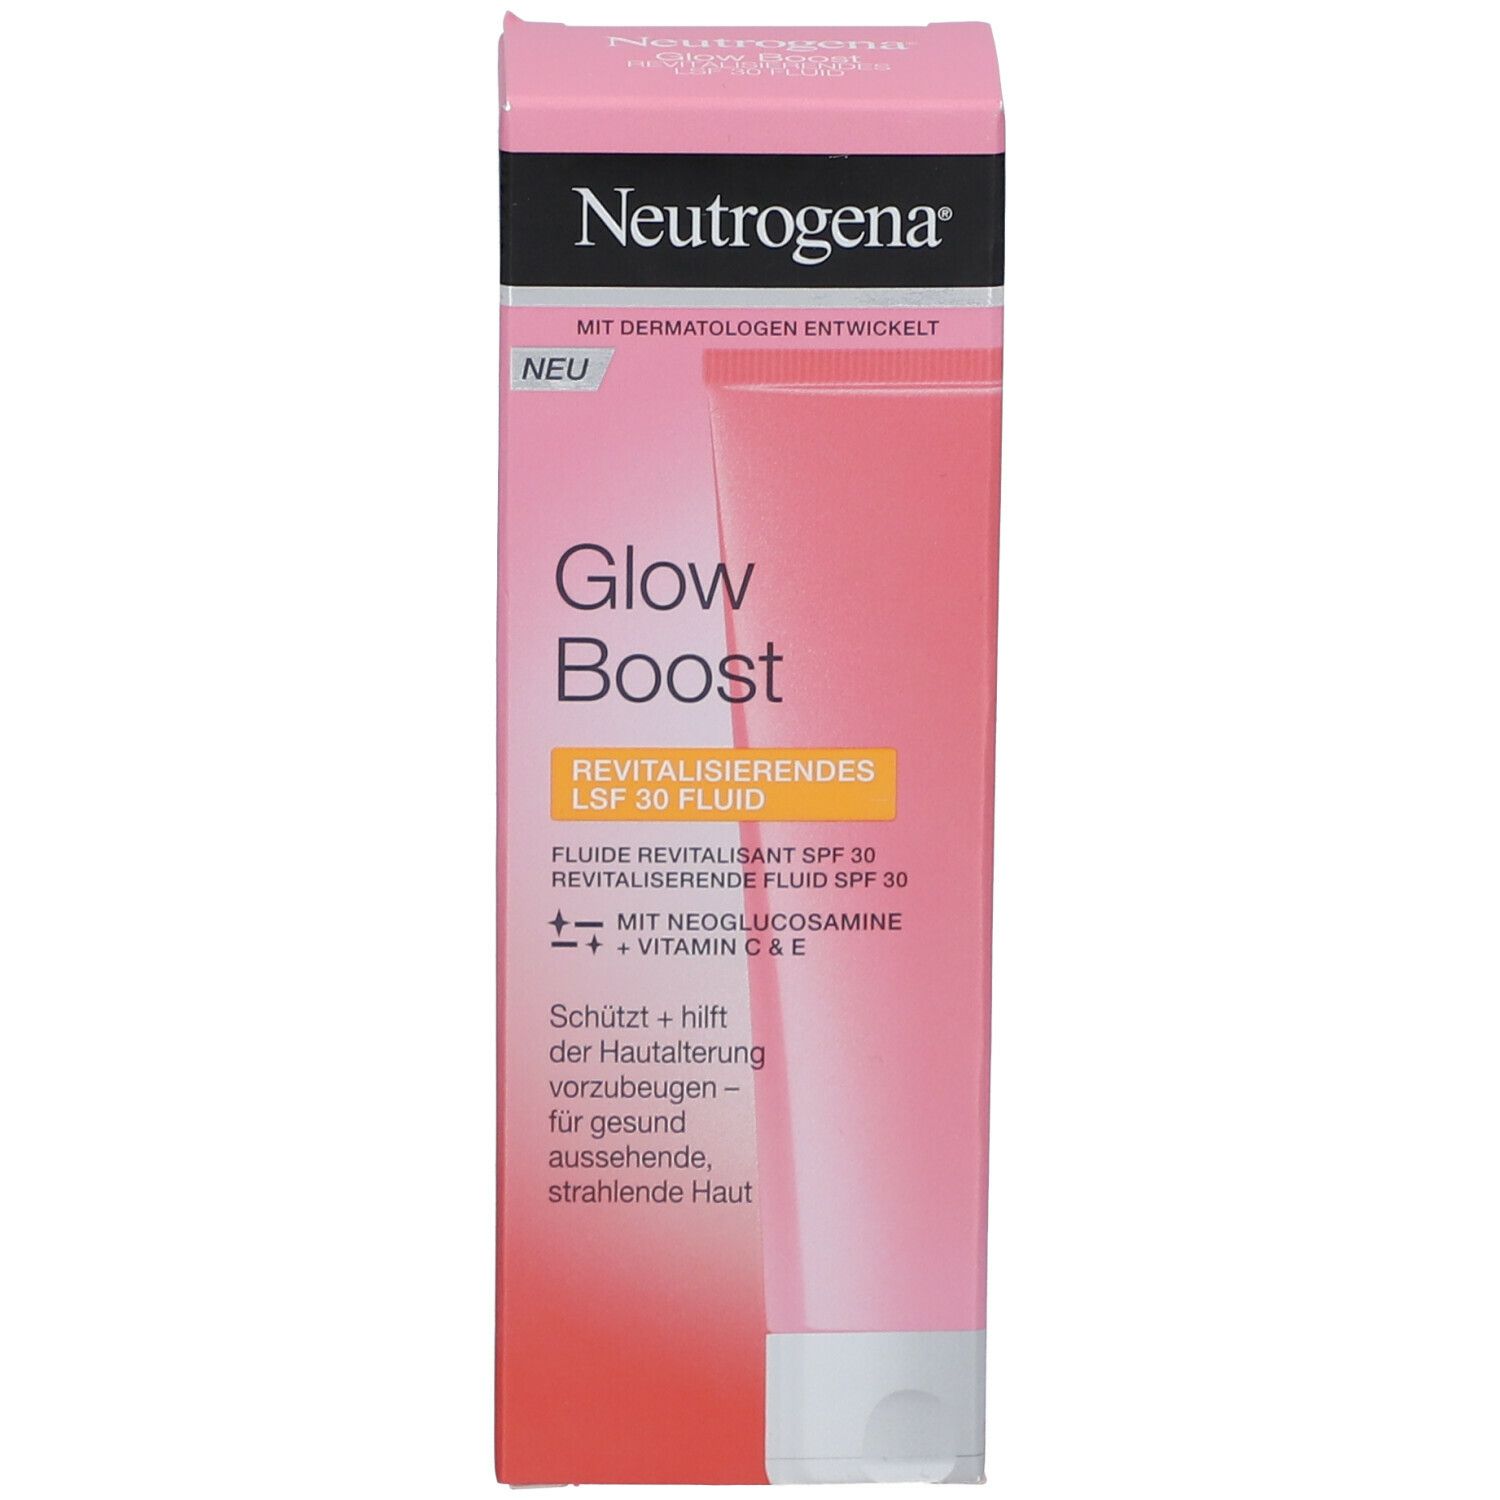 Neutrogena Glow Boost Revitaliserende Fluide SPF30